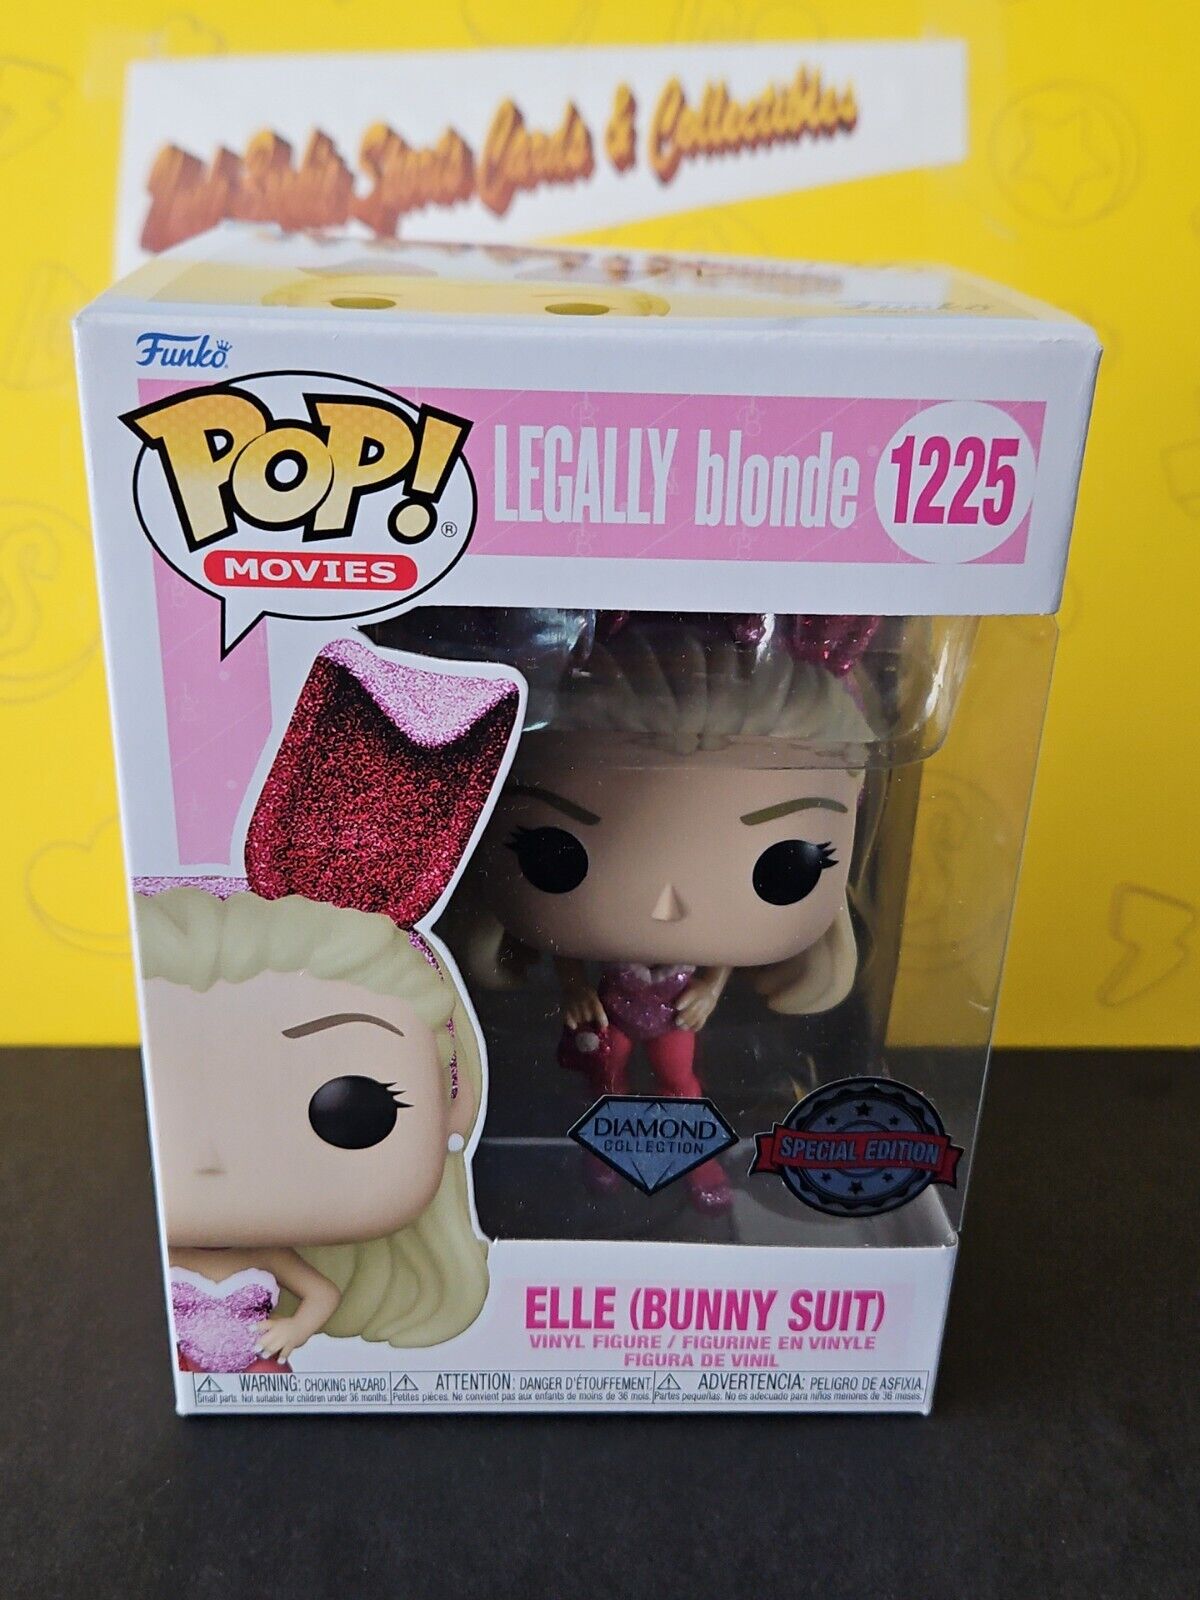 Funko Pop Movies: Legally Blonde - Exclusive Elle In Bunny Suit Diamond 1225